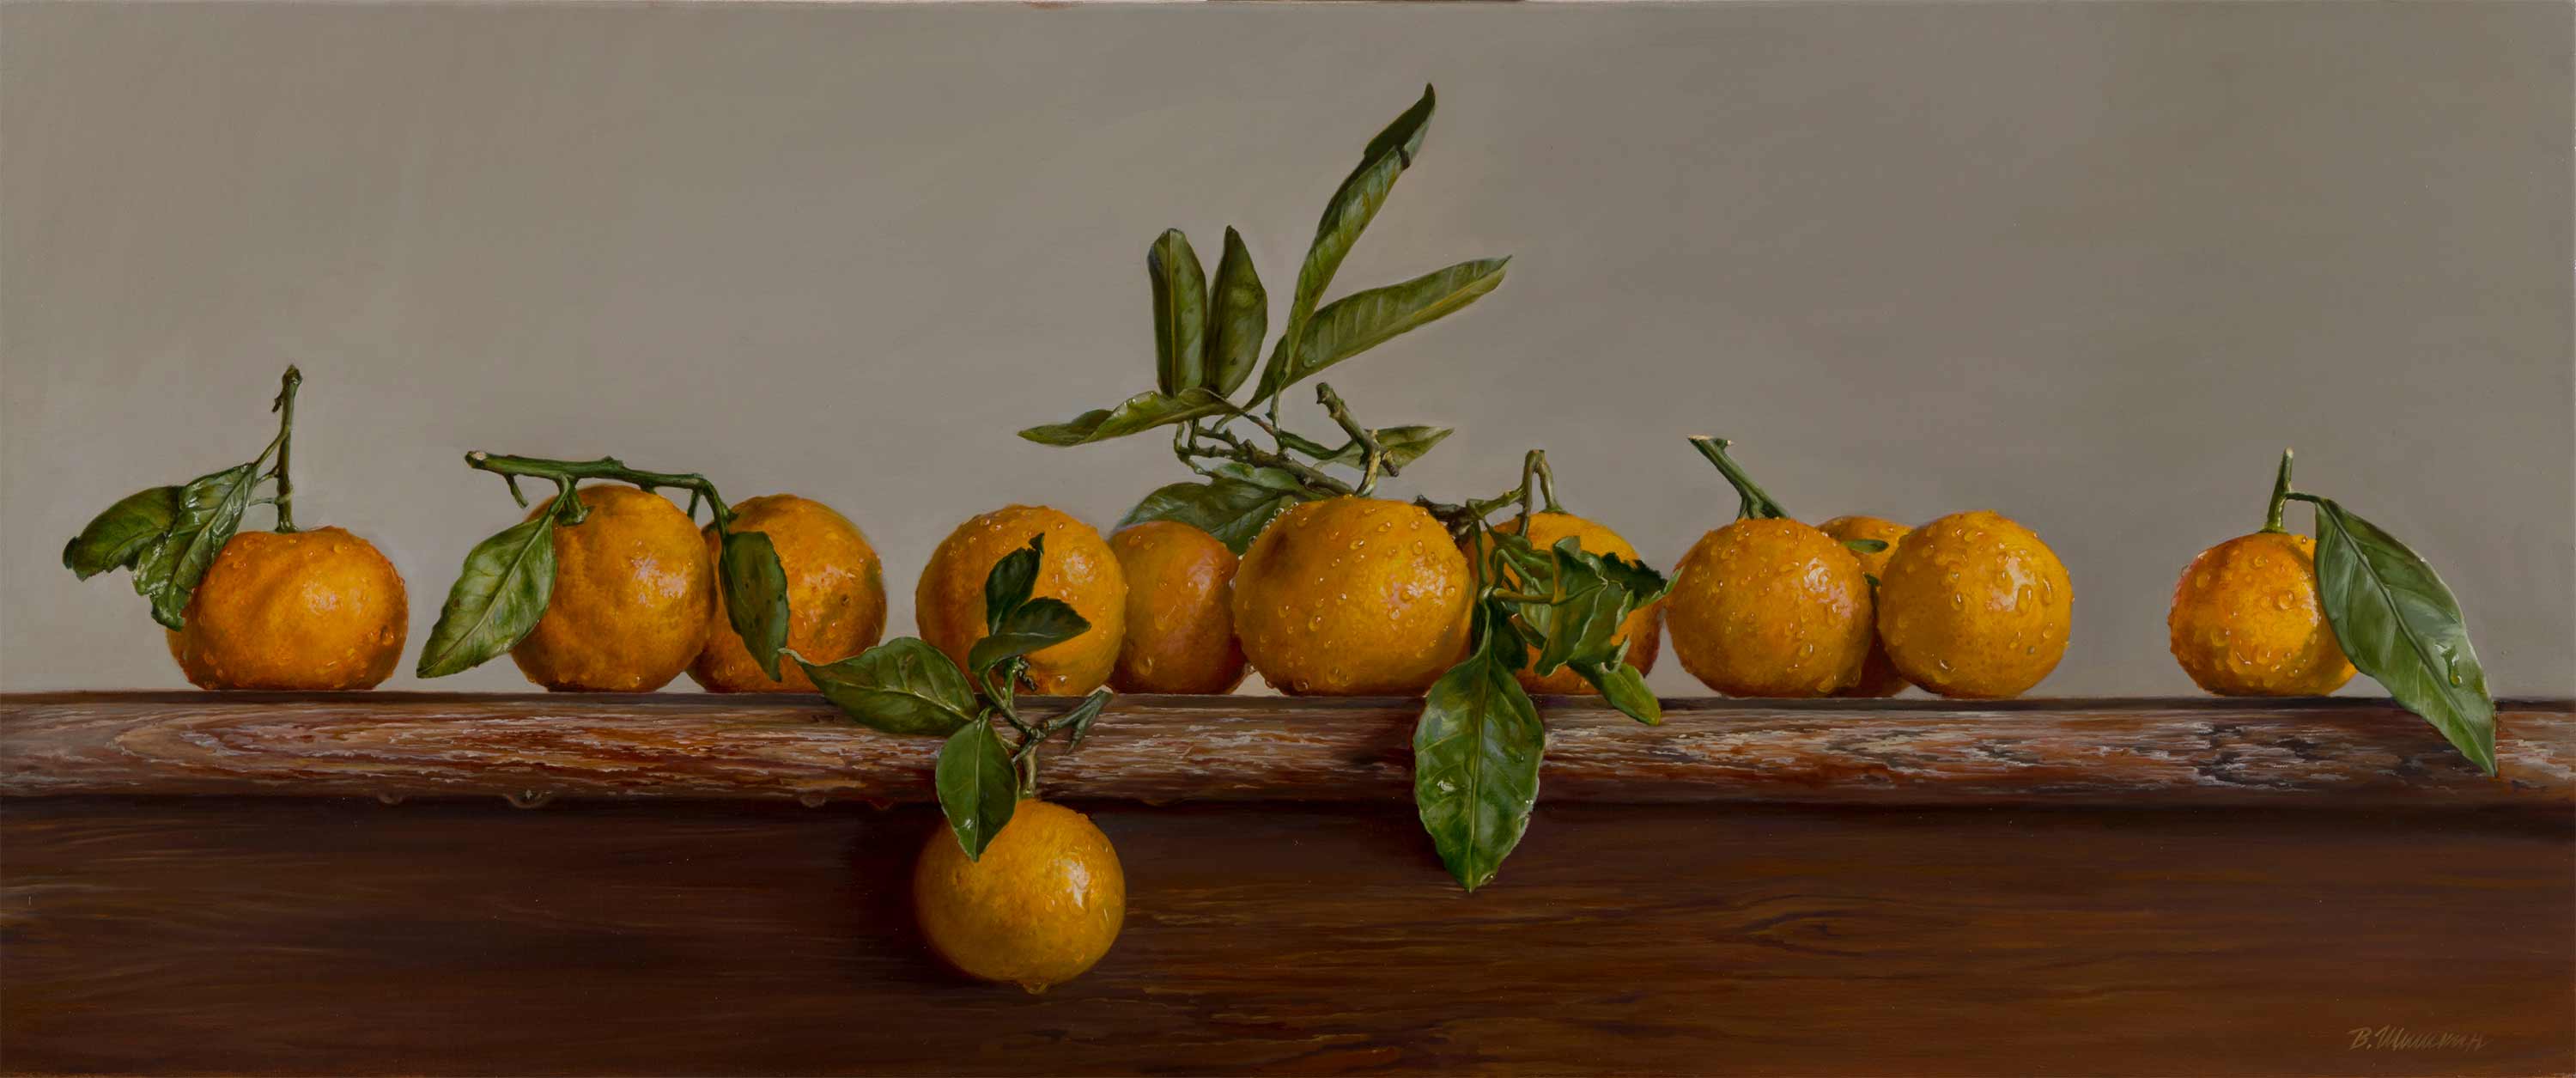 Mandarins - 1, Valery Shishkin, Buy the painting Oil